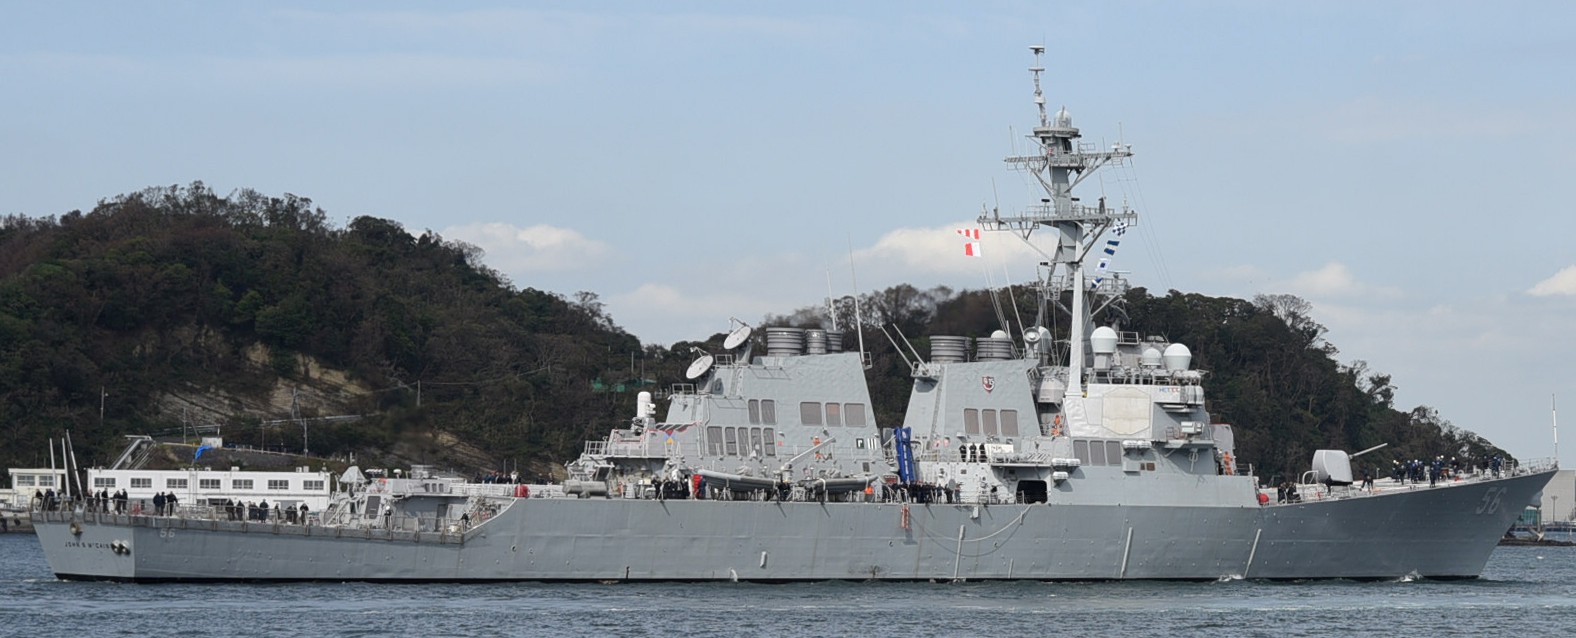 ddg-56 uss john s. mccain guided missile destroyer arleigh burke class us navy 131 yokosuka japan